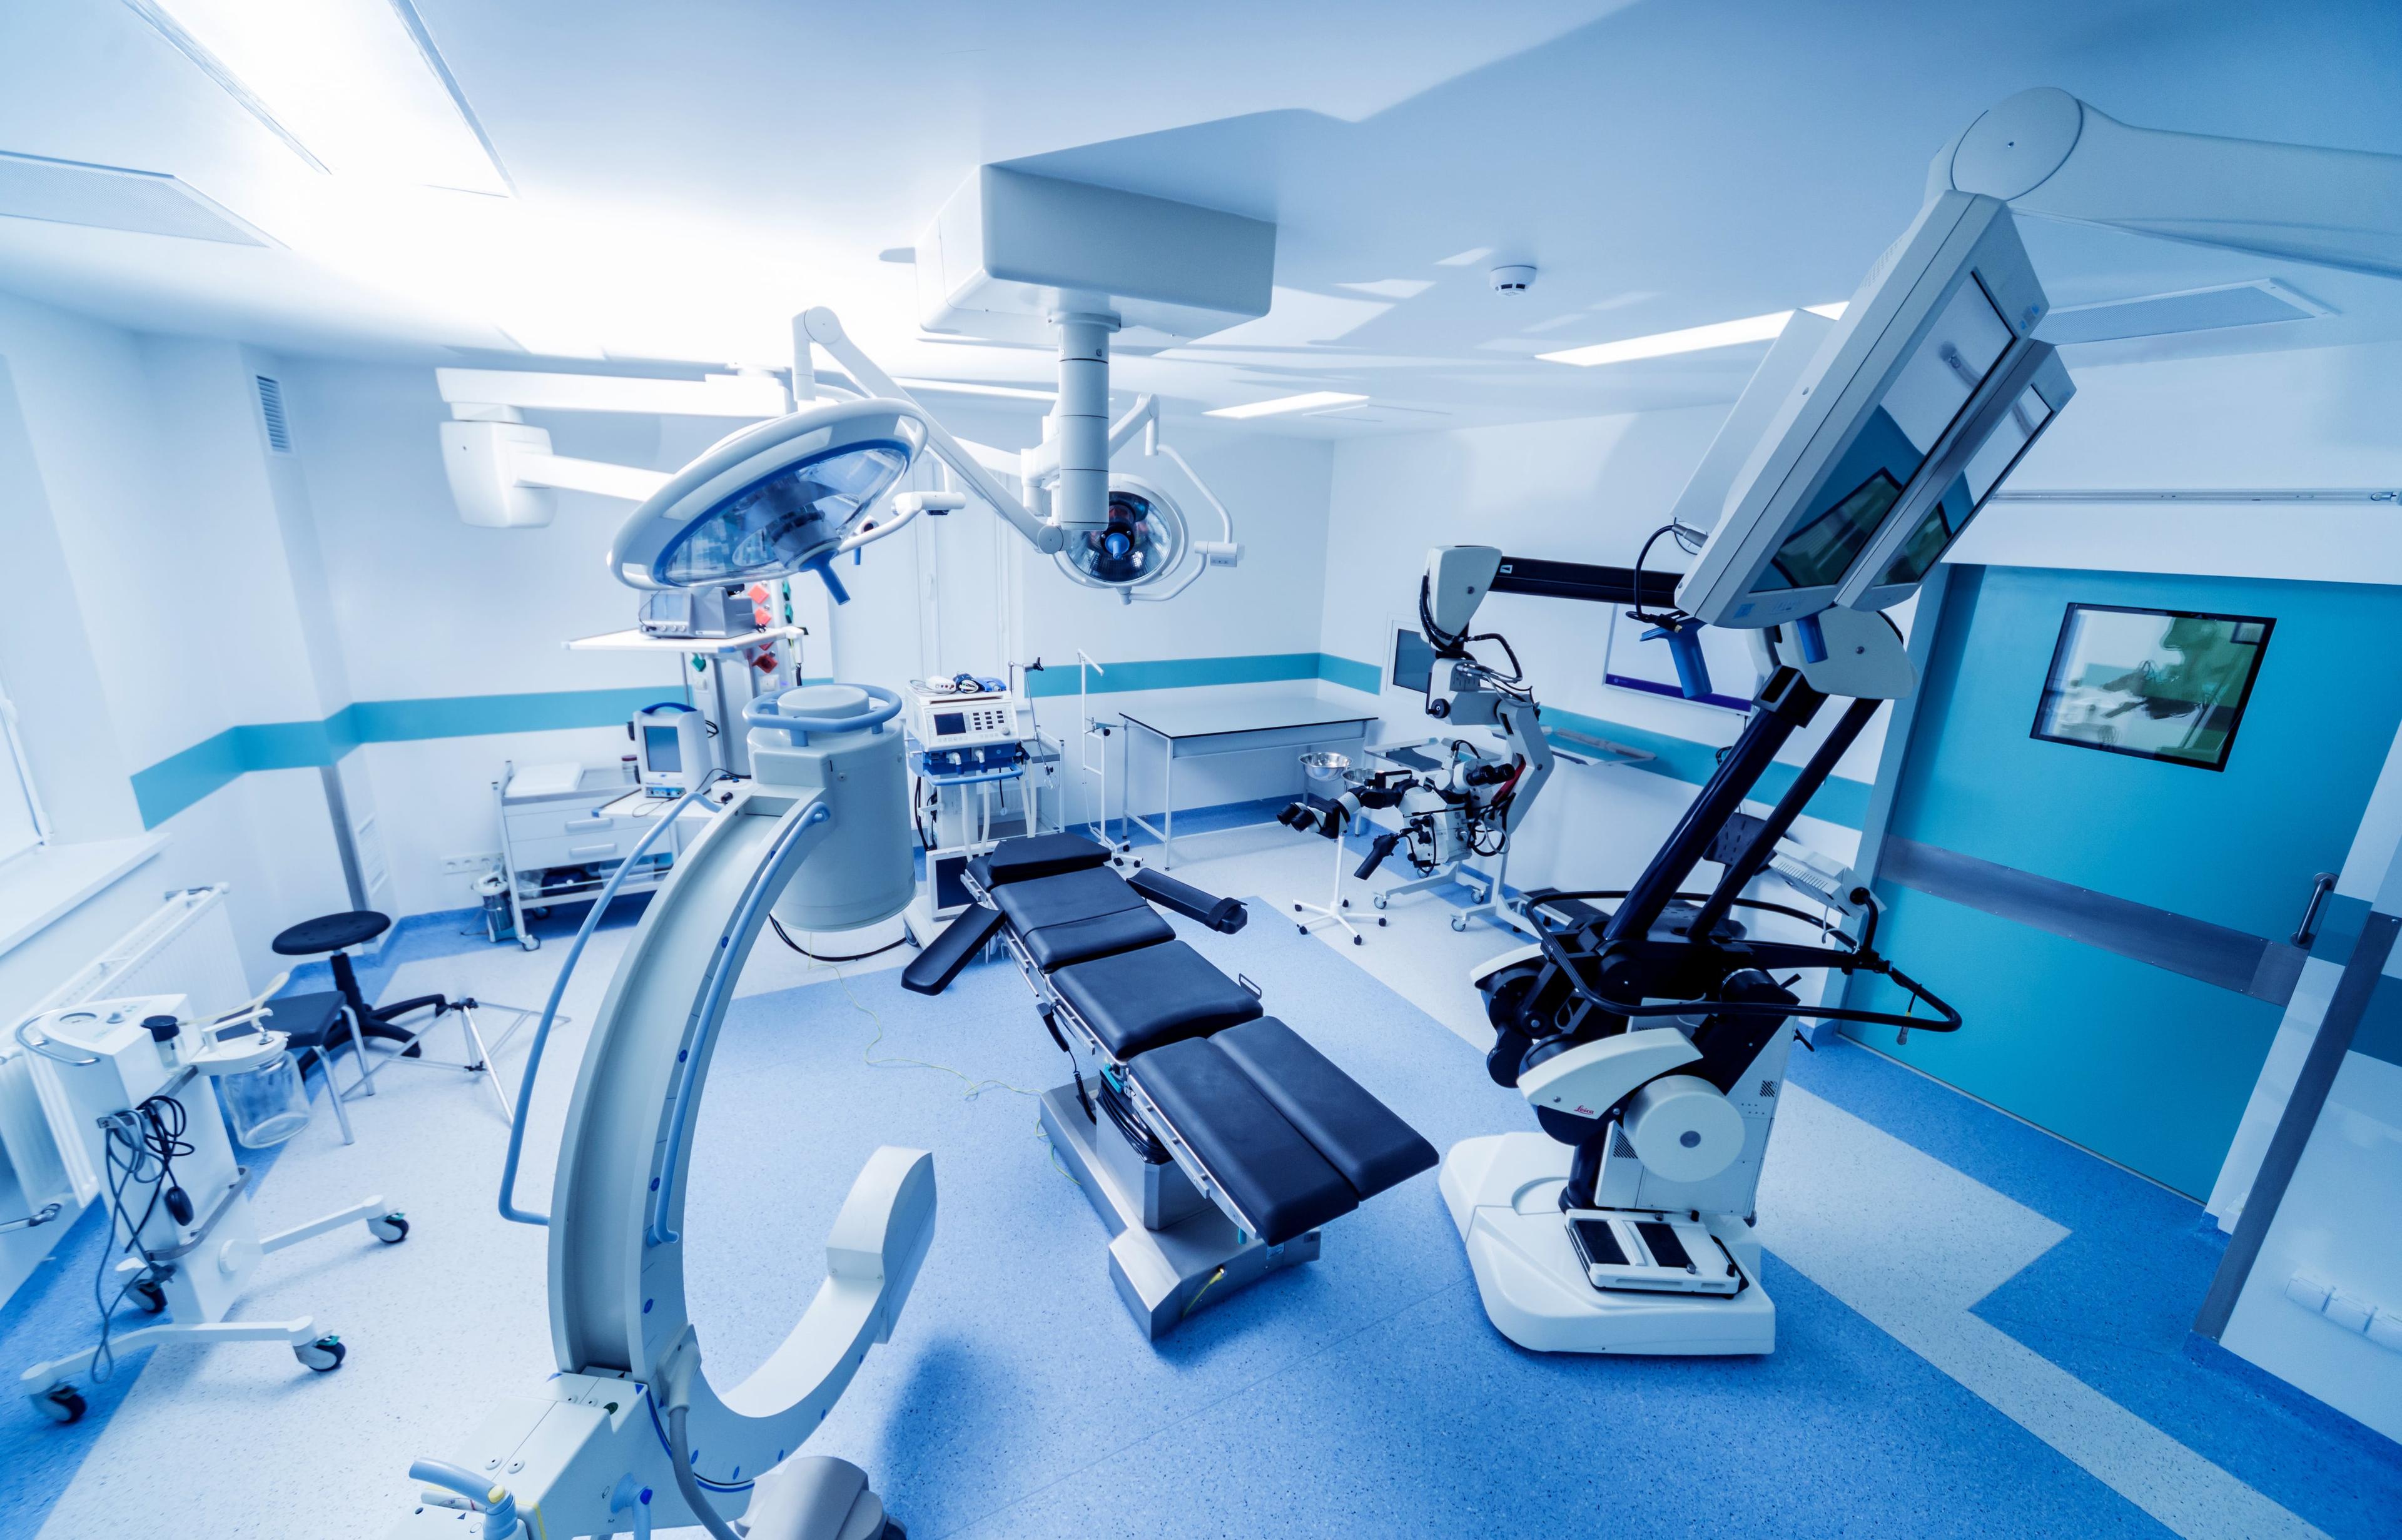 Healthcare facility using robotics equipment in patient room for procedures